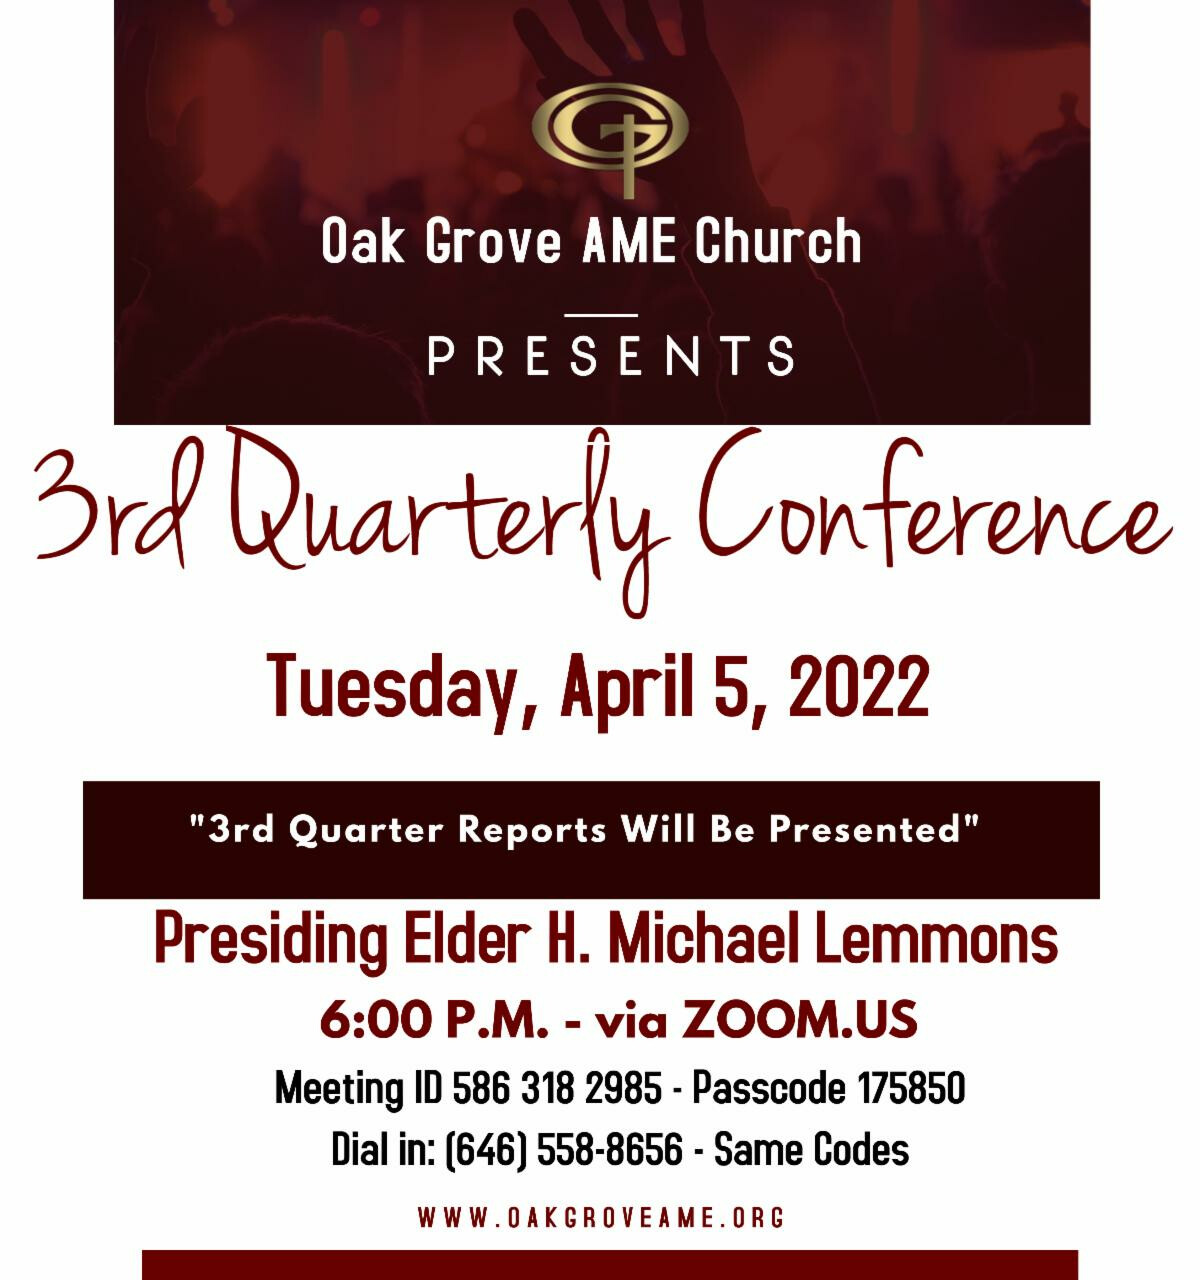 4th-quarterly-conference-oak-grove-ame-detroit-mi